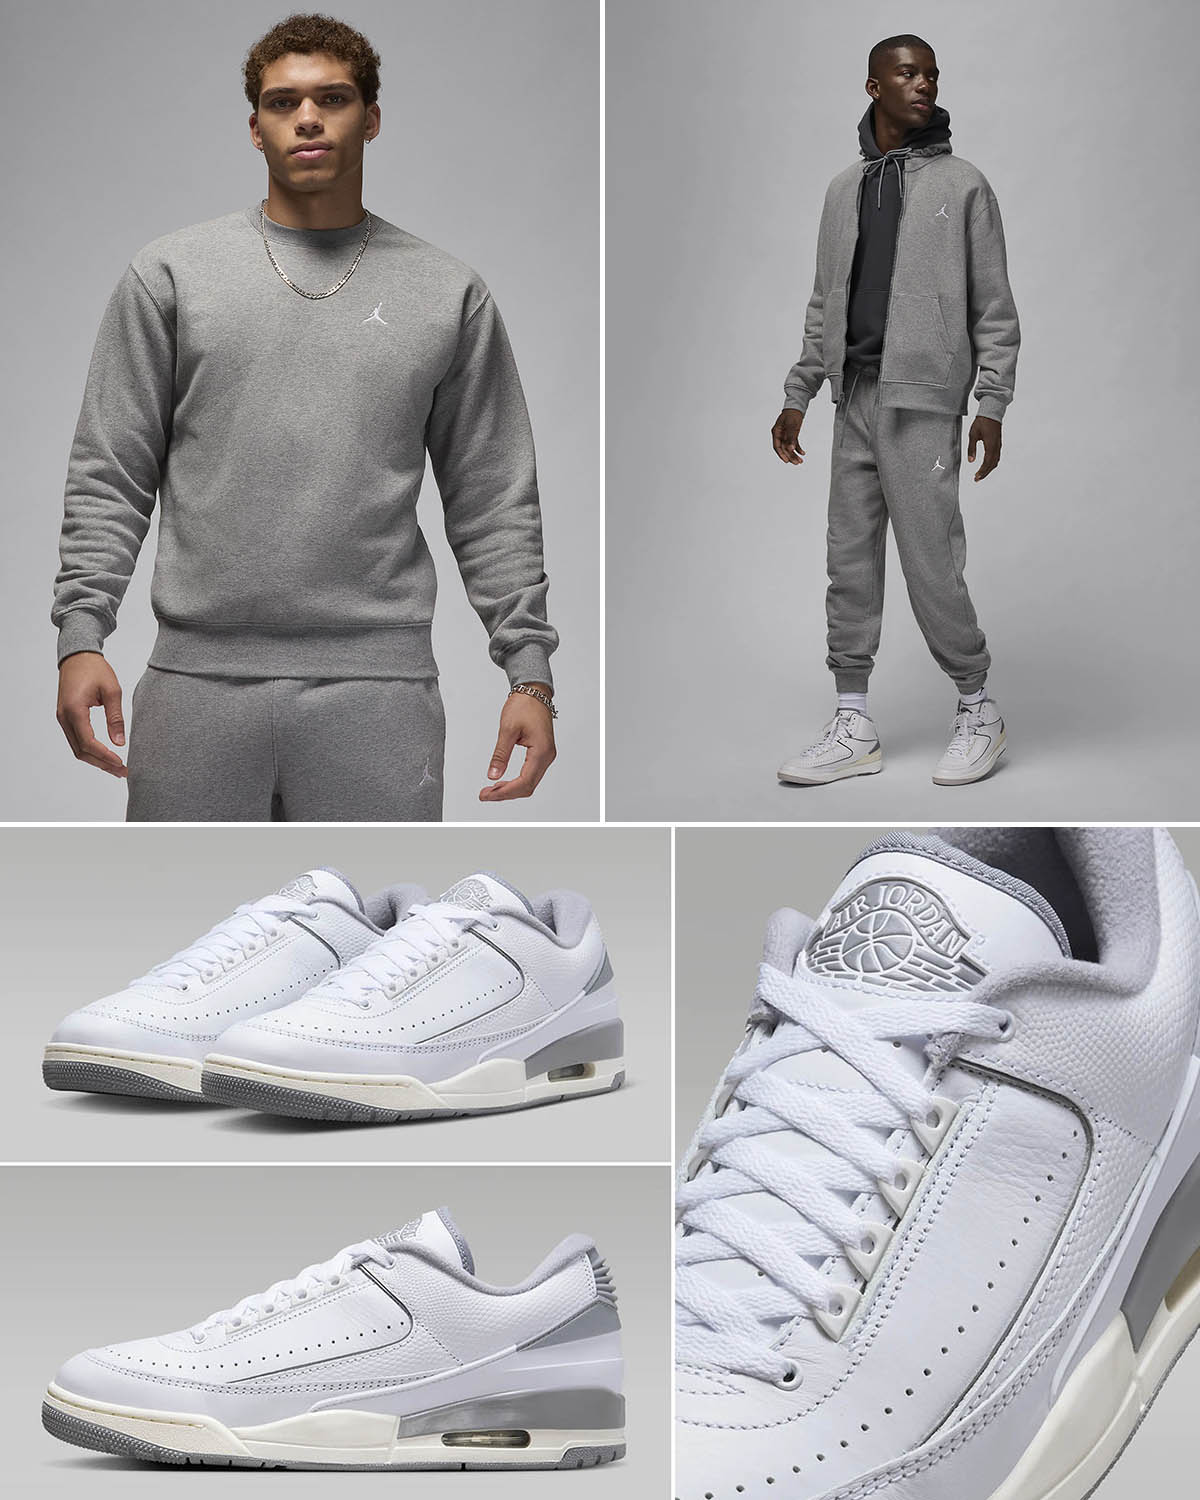 Jordan 2 3 White Cement Grey Clothing Match